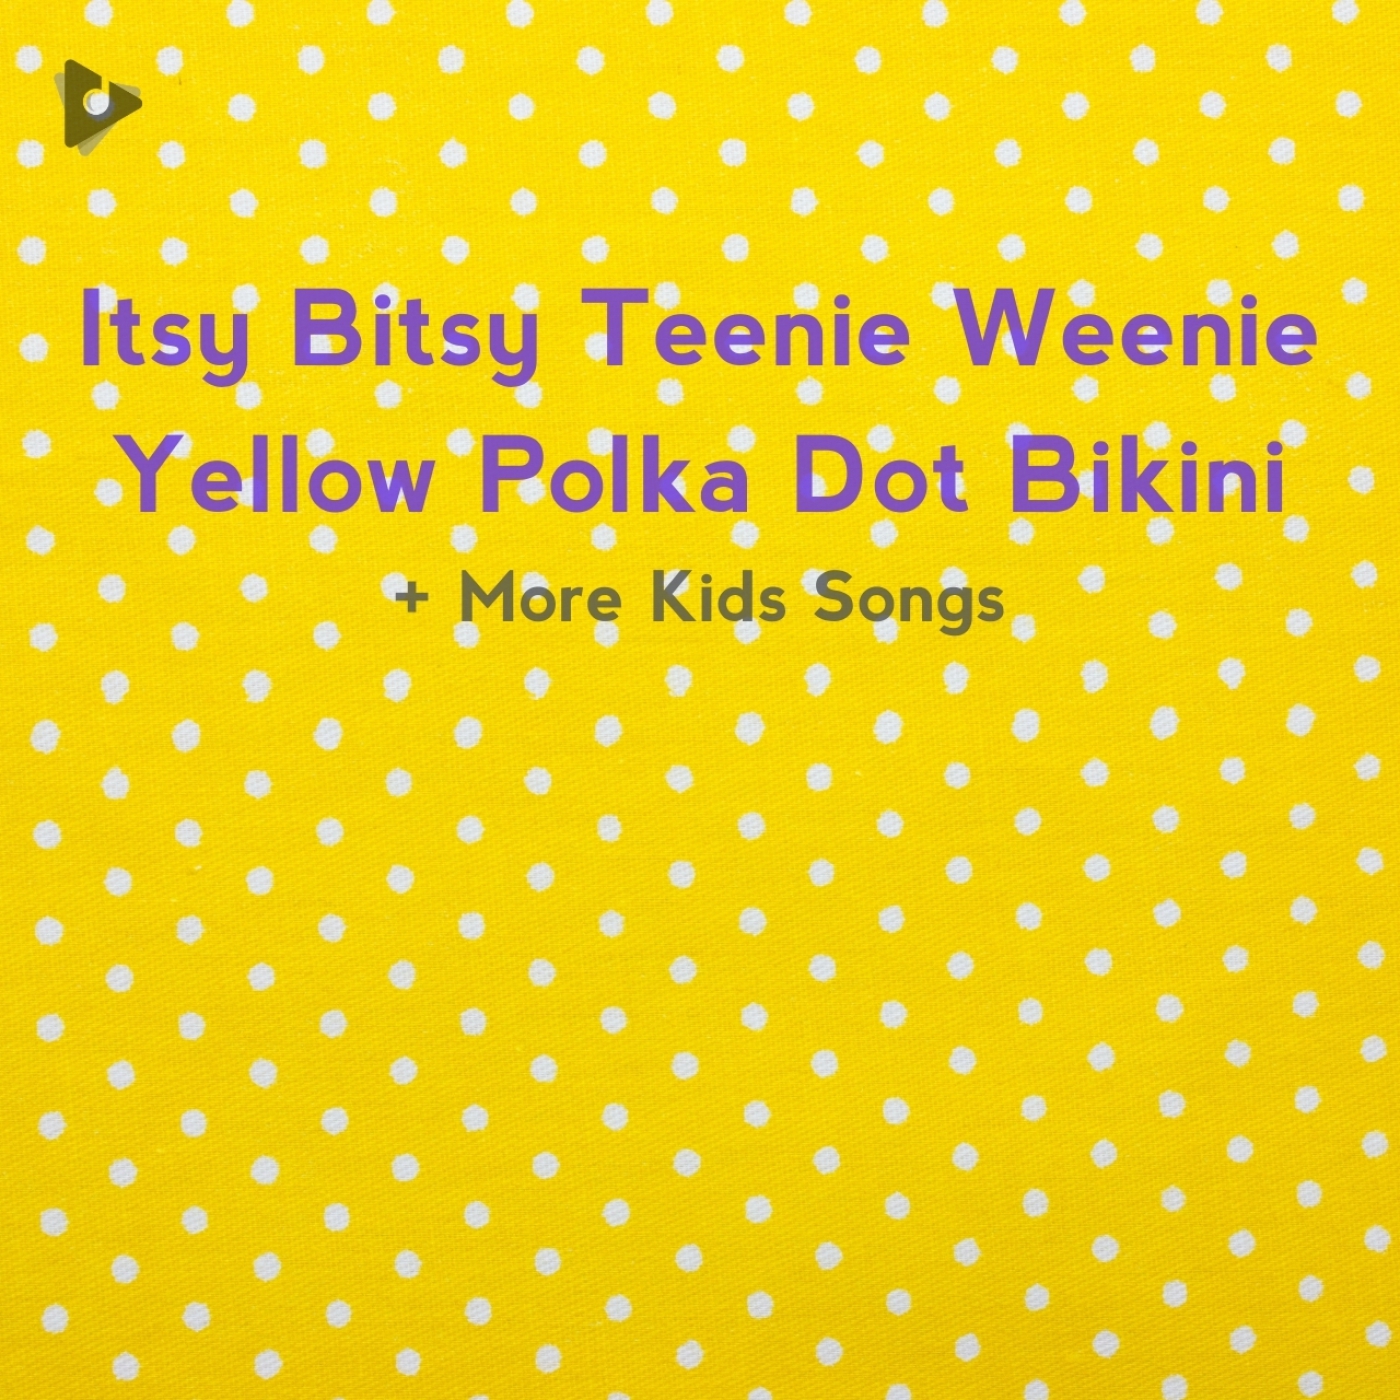 Itsy Bitsy Teenie Weenie Yellow Polka Dot Bikini + More Kids Songs